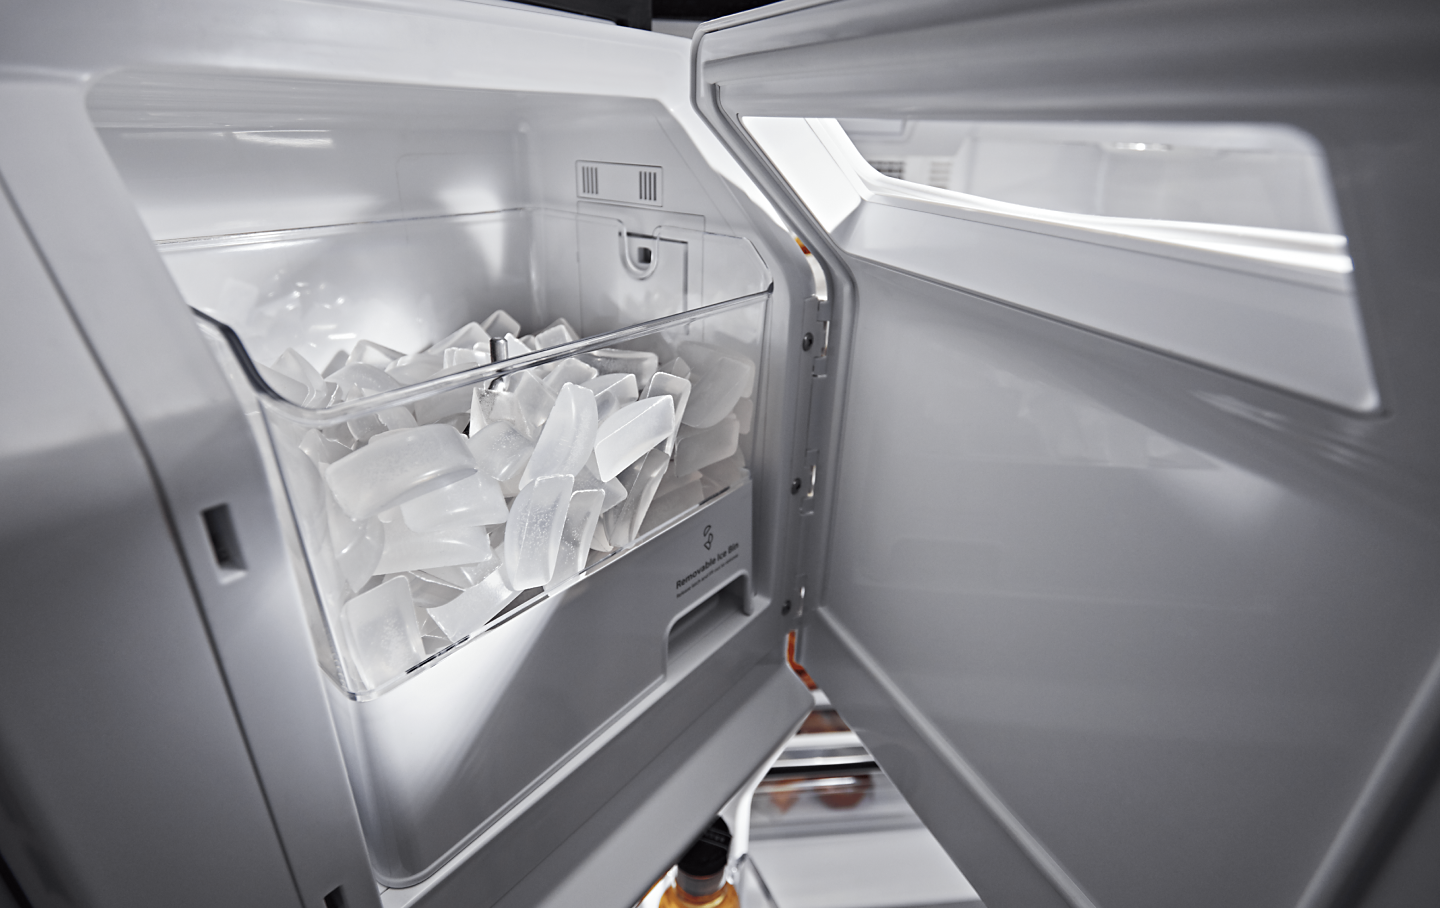 Refrigerator Ice Maker Troubleshooting | KitchenAid